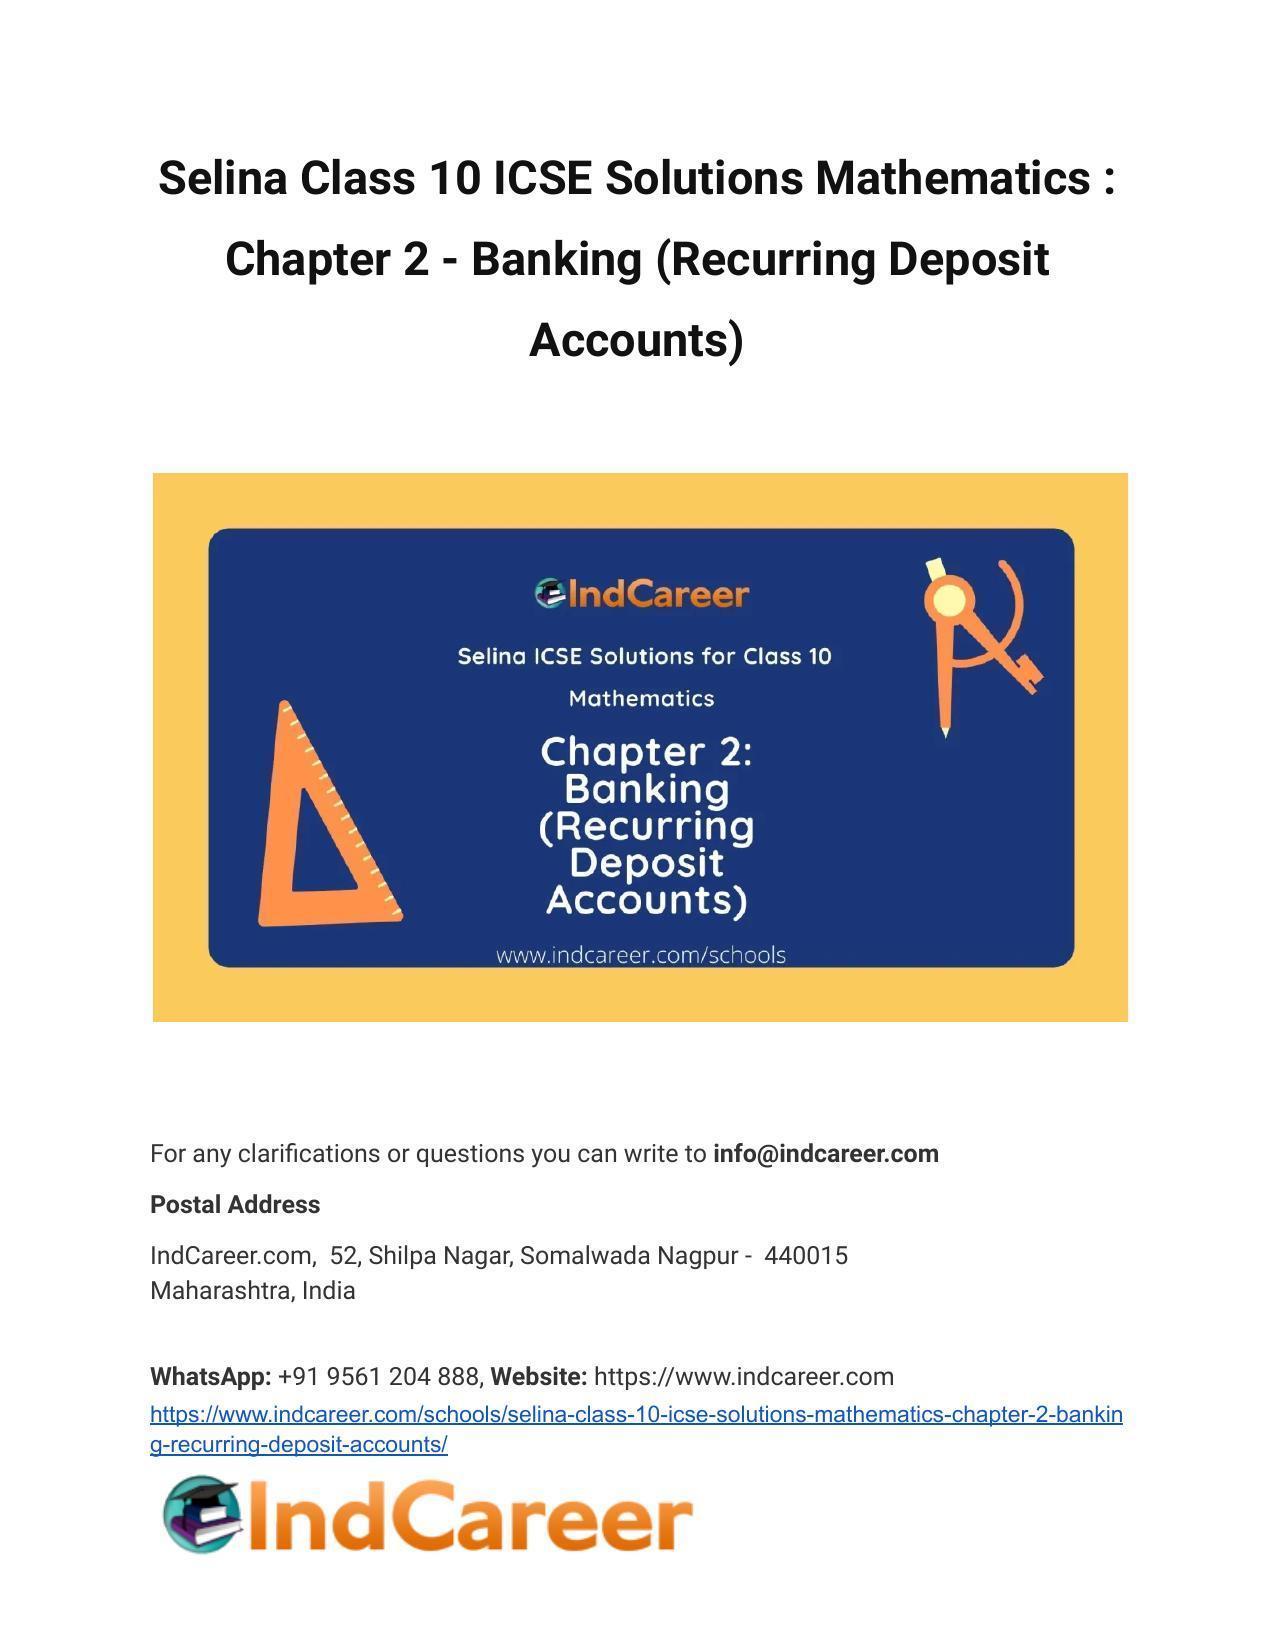 Selina Class 10 Icse Solutions Mathematics Chapter 2 Banking Recurring Deposit Accounts 6400